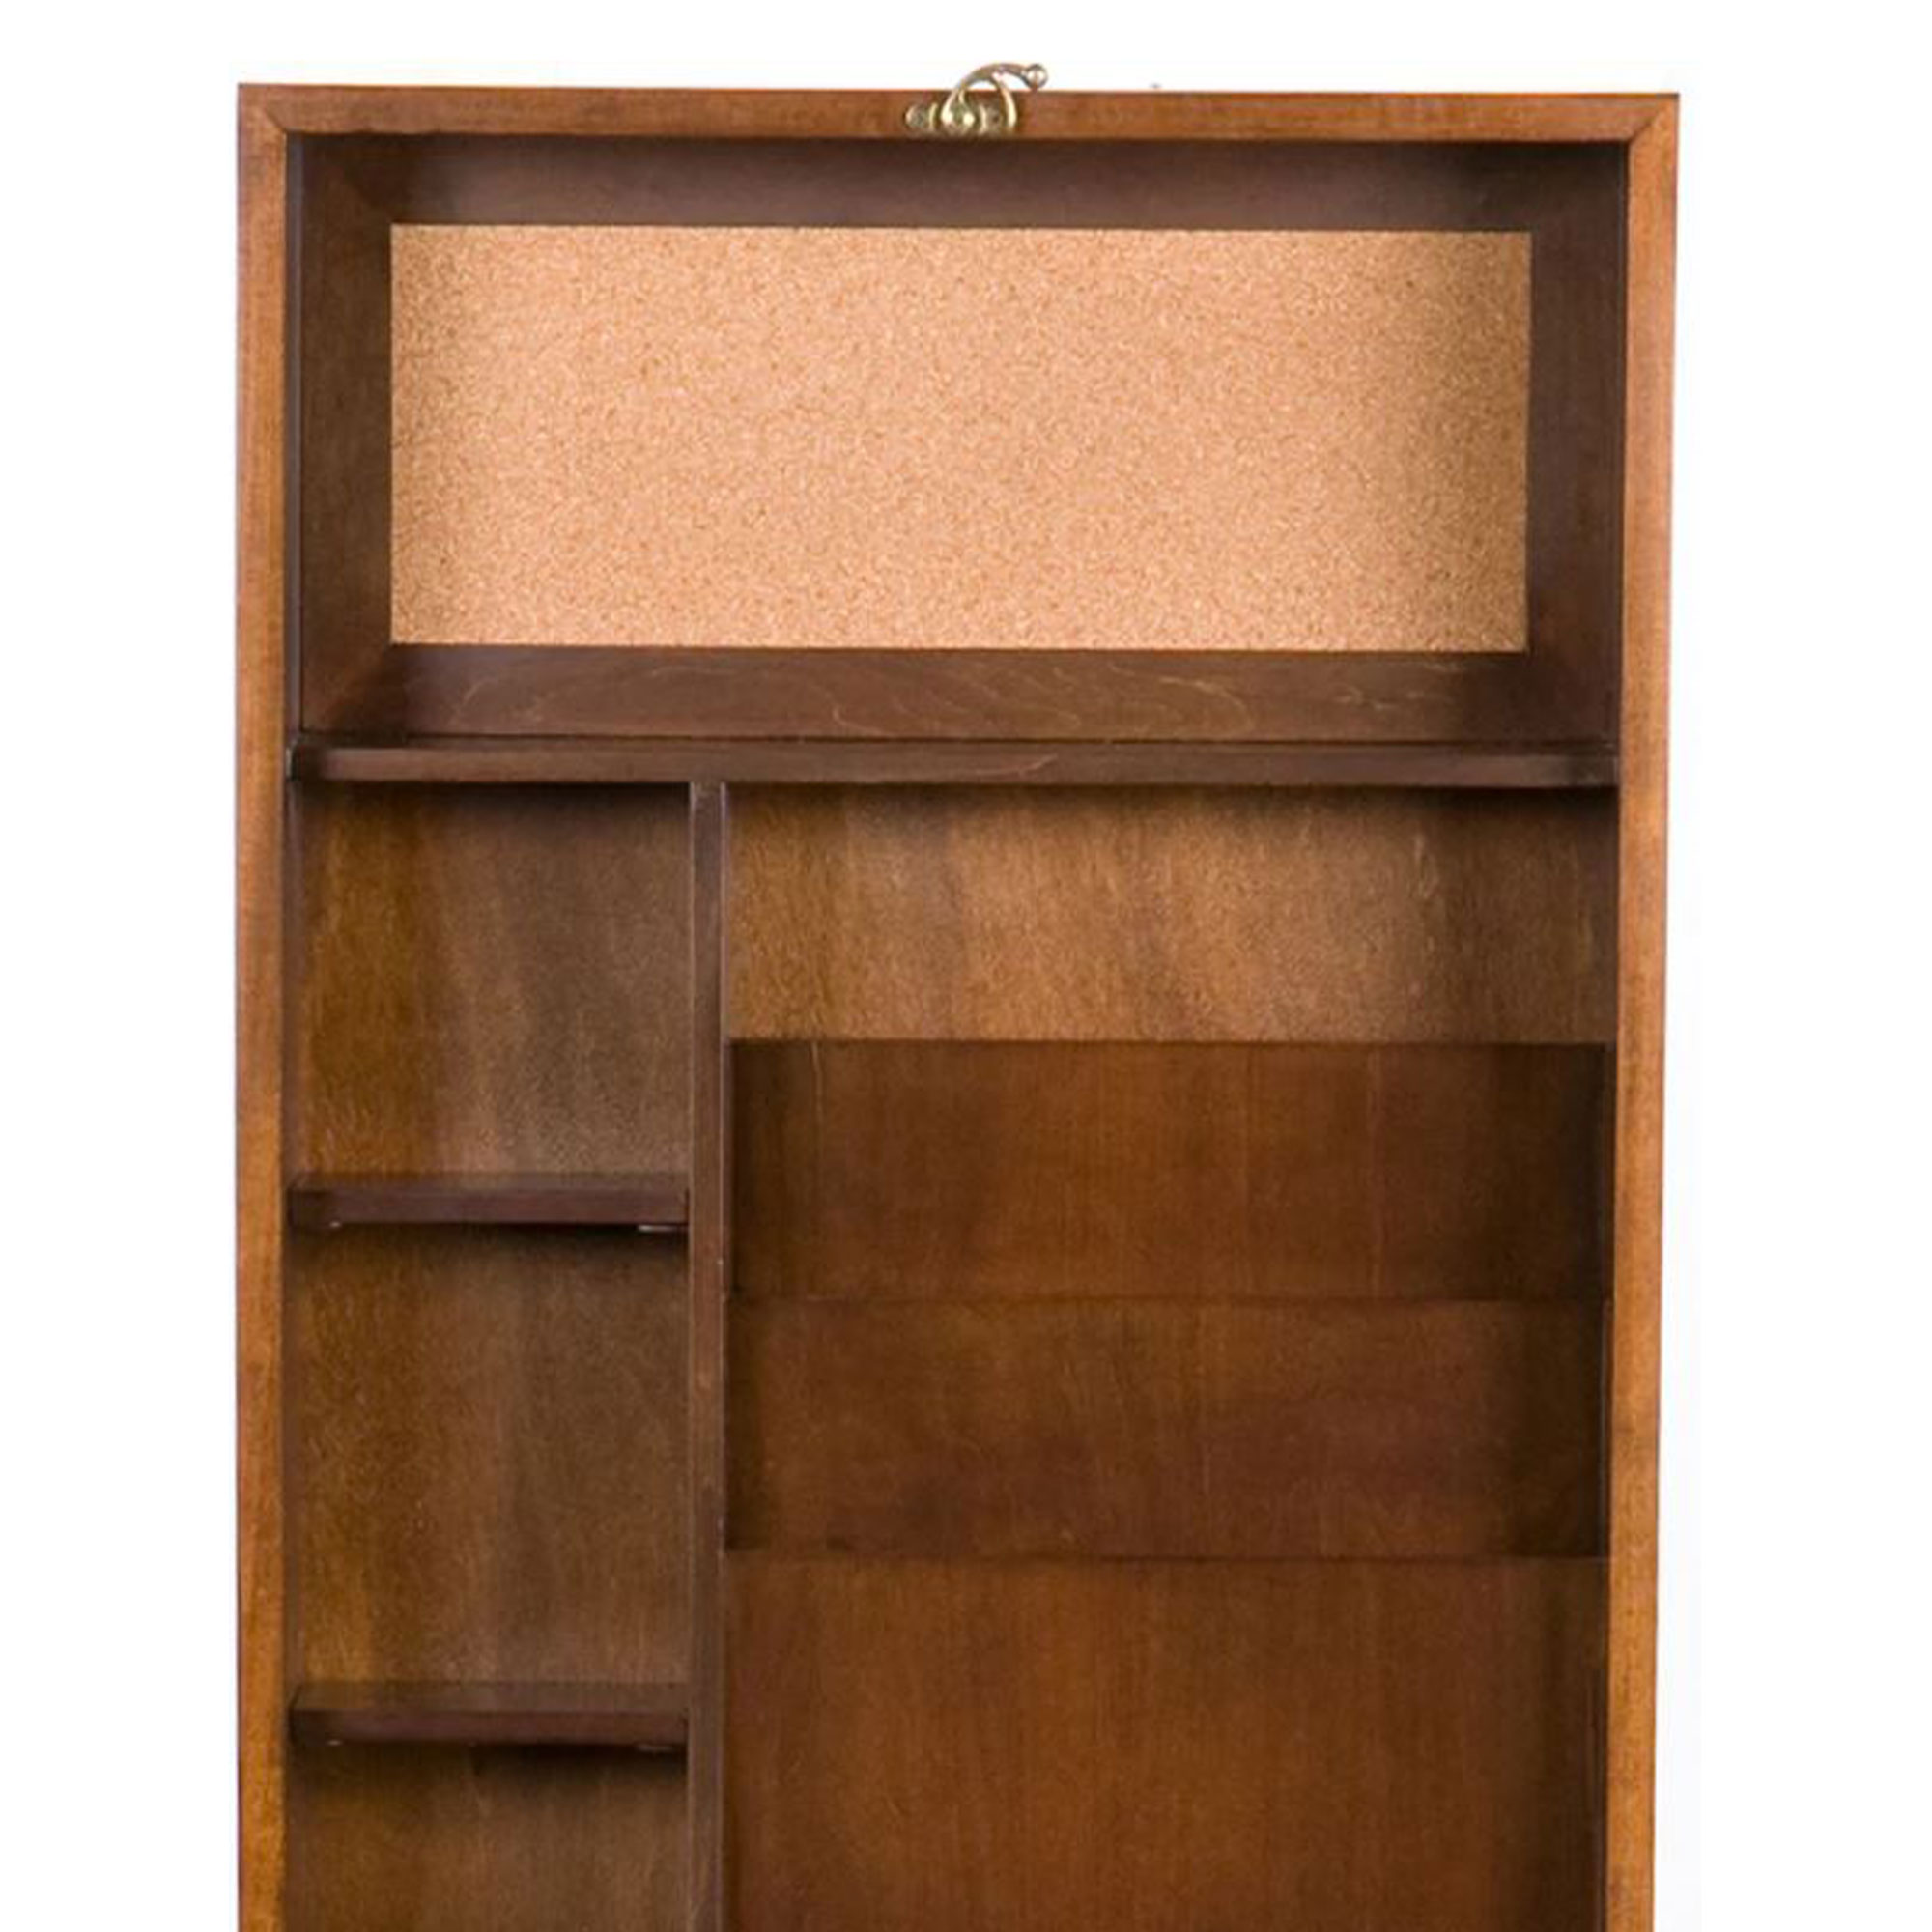 SEI Furniture Foldable Convertible Writing Desk with Cork Board, Walnut - image 3 of 7